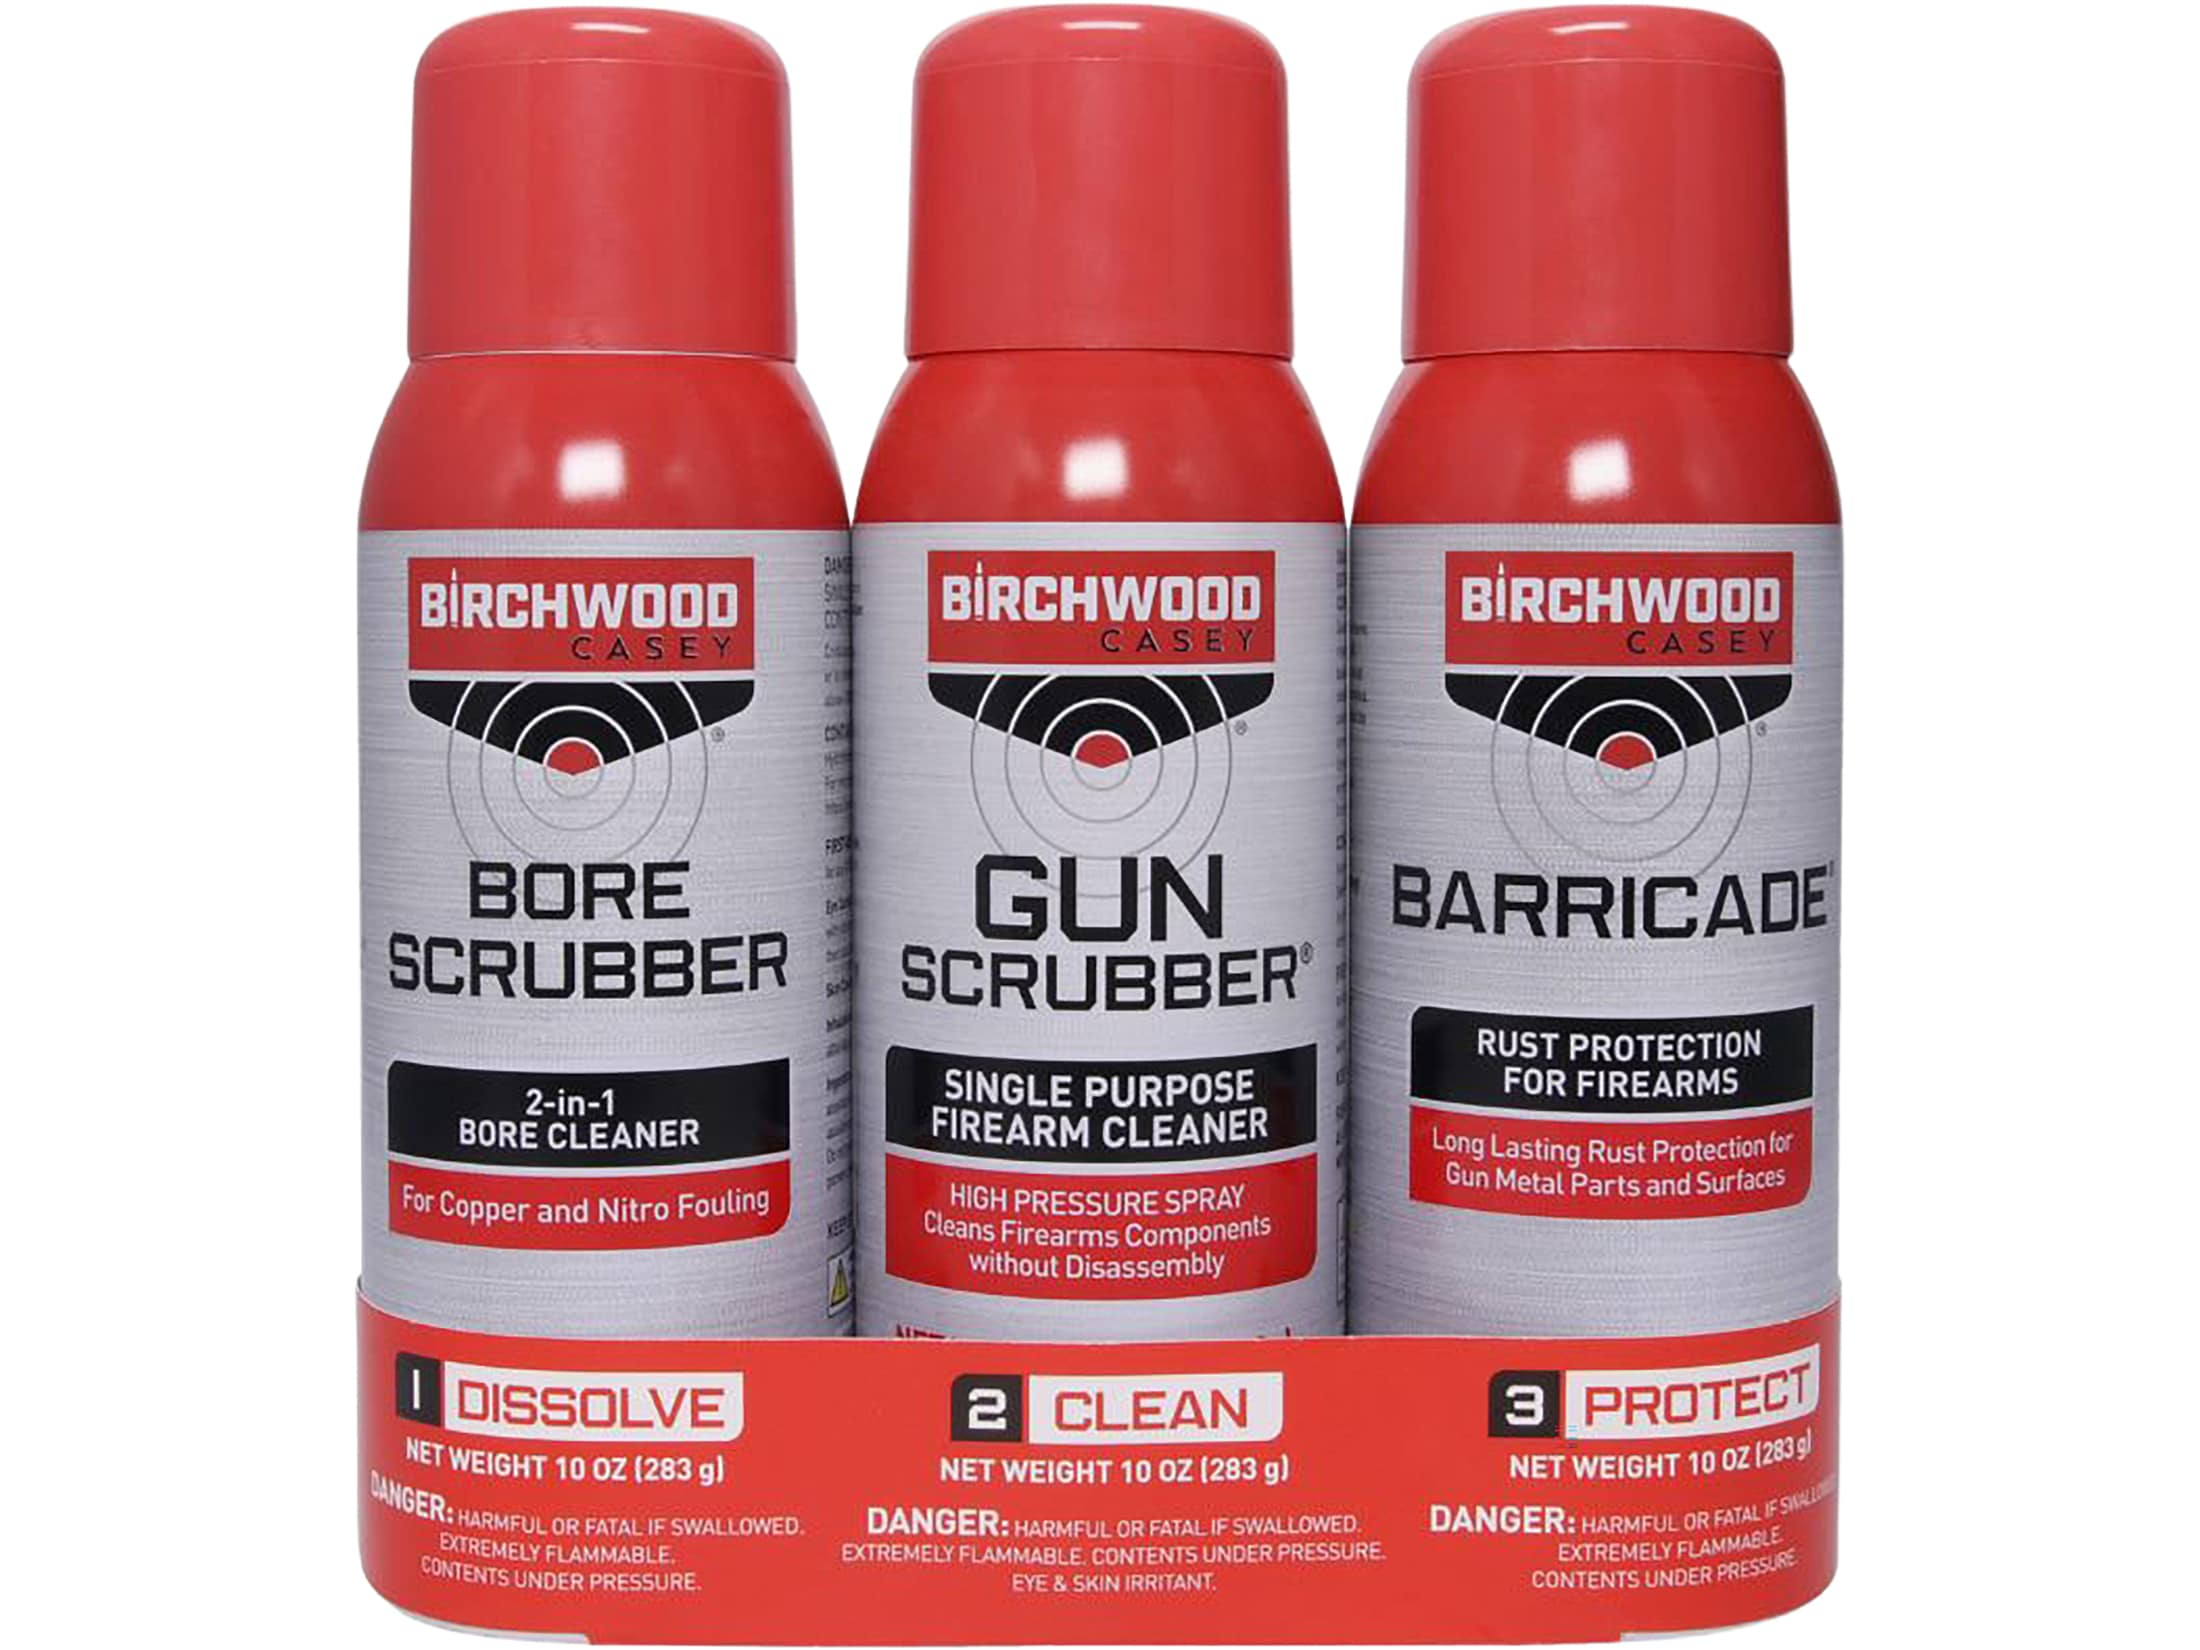 Birchwood Casey 1-2-3 Aerosol Value Pack (Gun Scrubber, Bore Scrubber